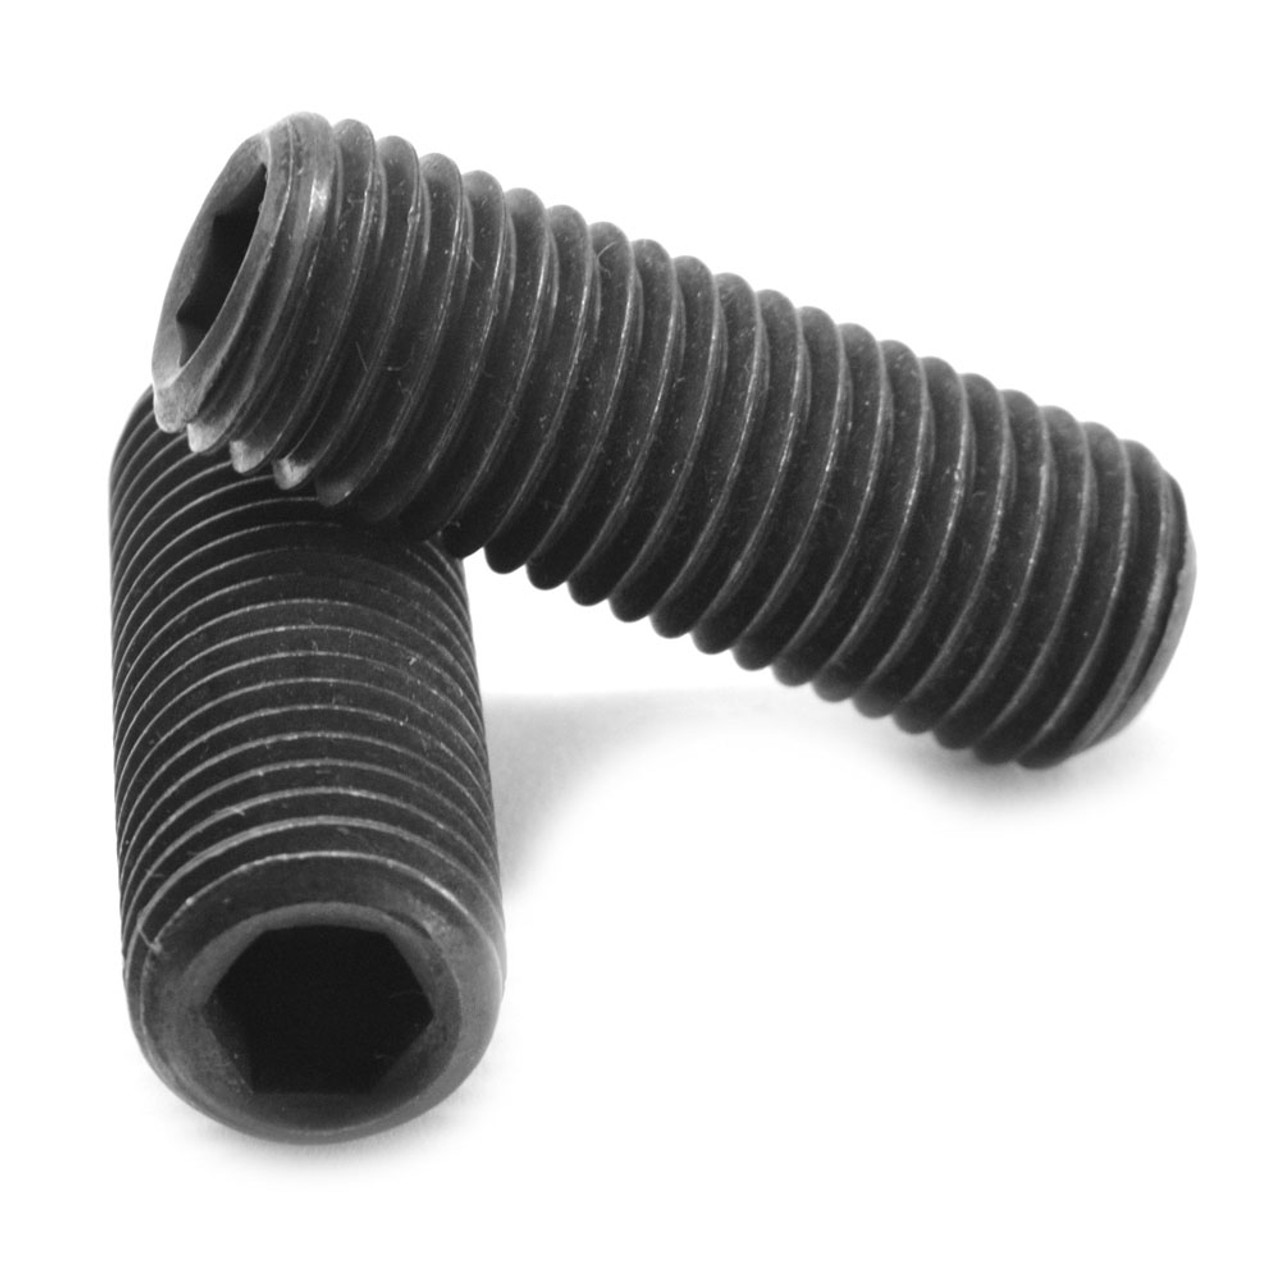 7/16"-14 x 2 3/4" Coarse Thread Socket Set Screw Cup Point Alloy Steel Black Oxide